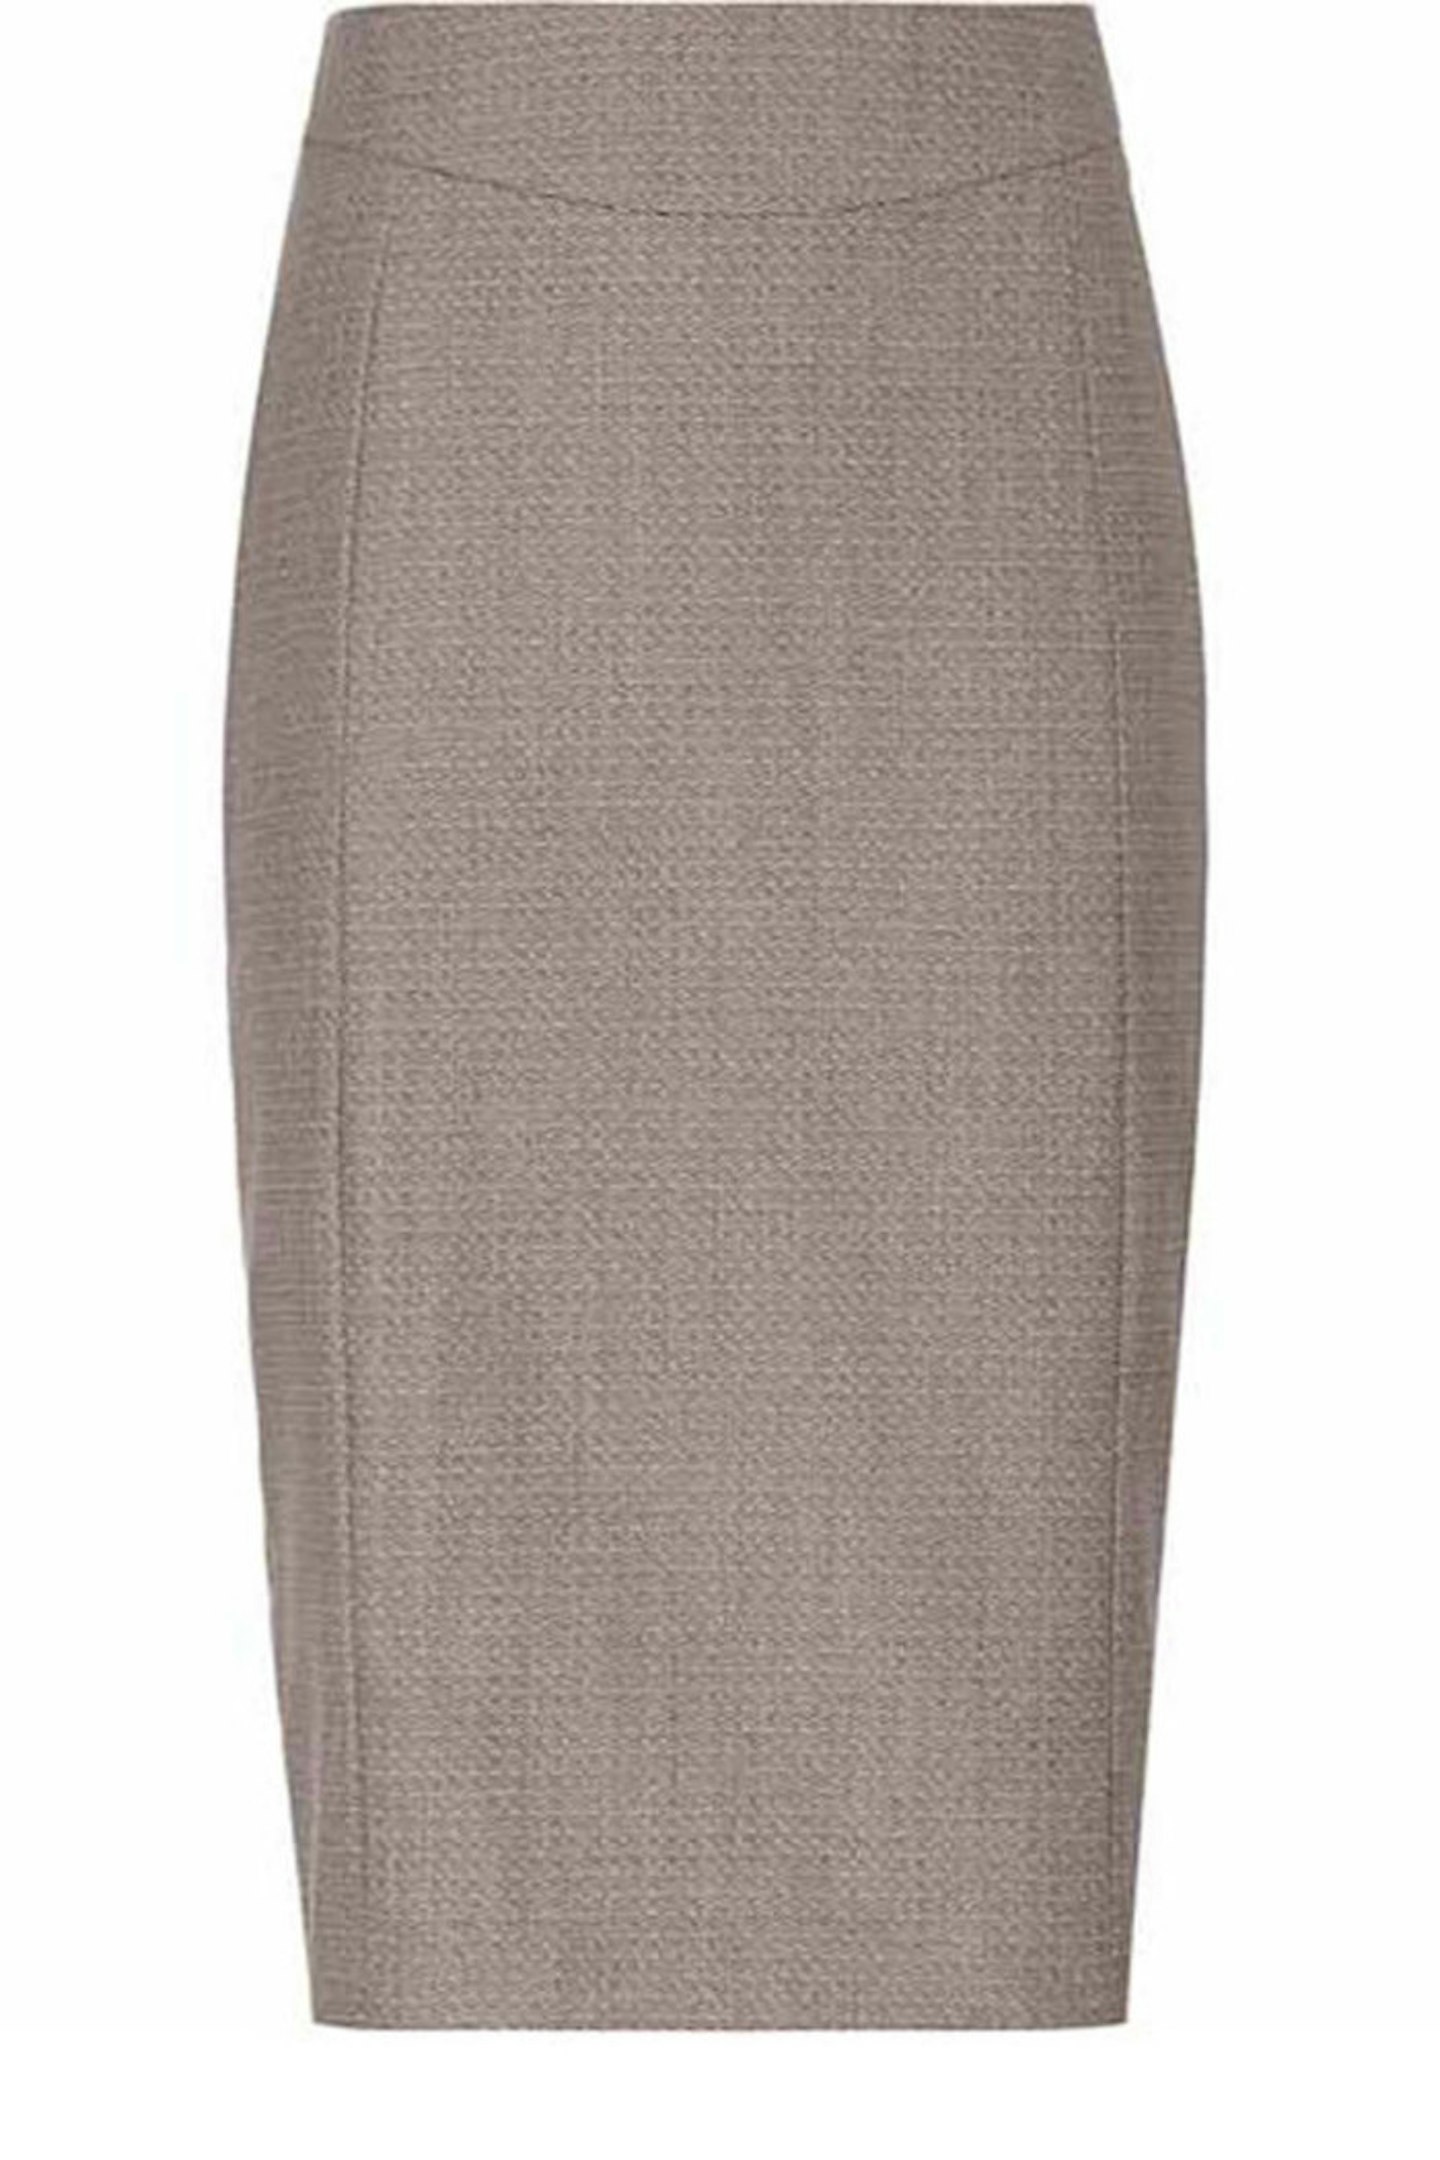 Tailored Pencil Skirt, £110, Reiss